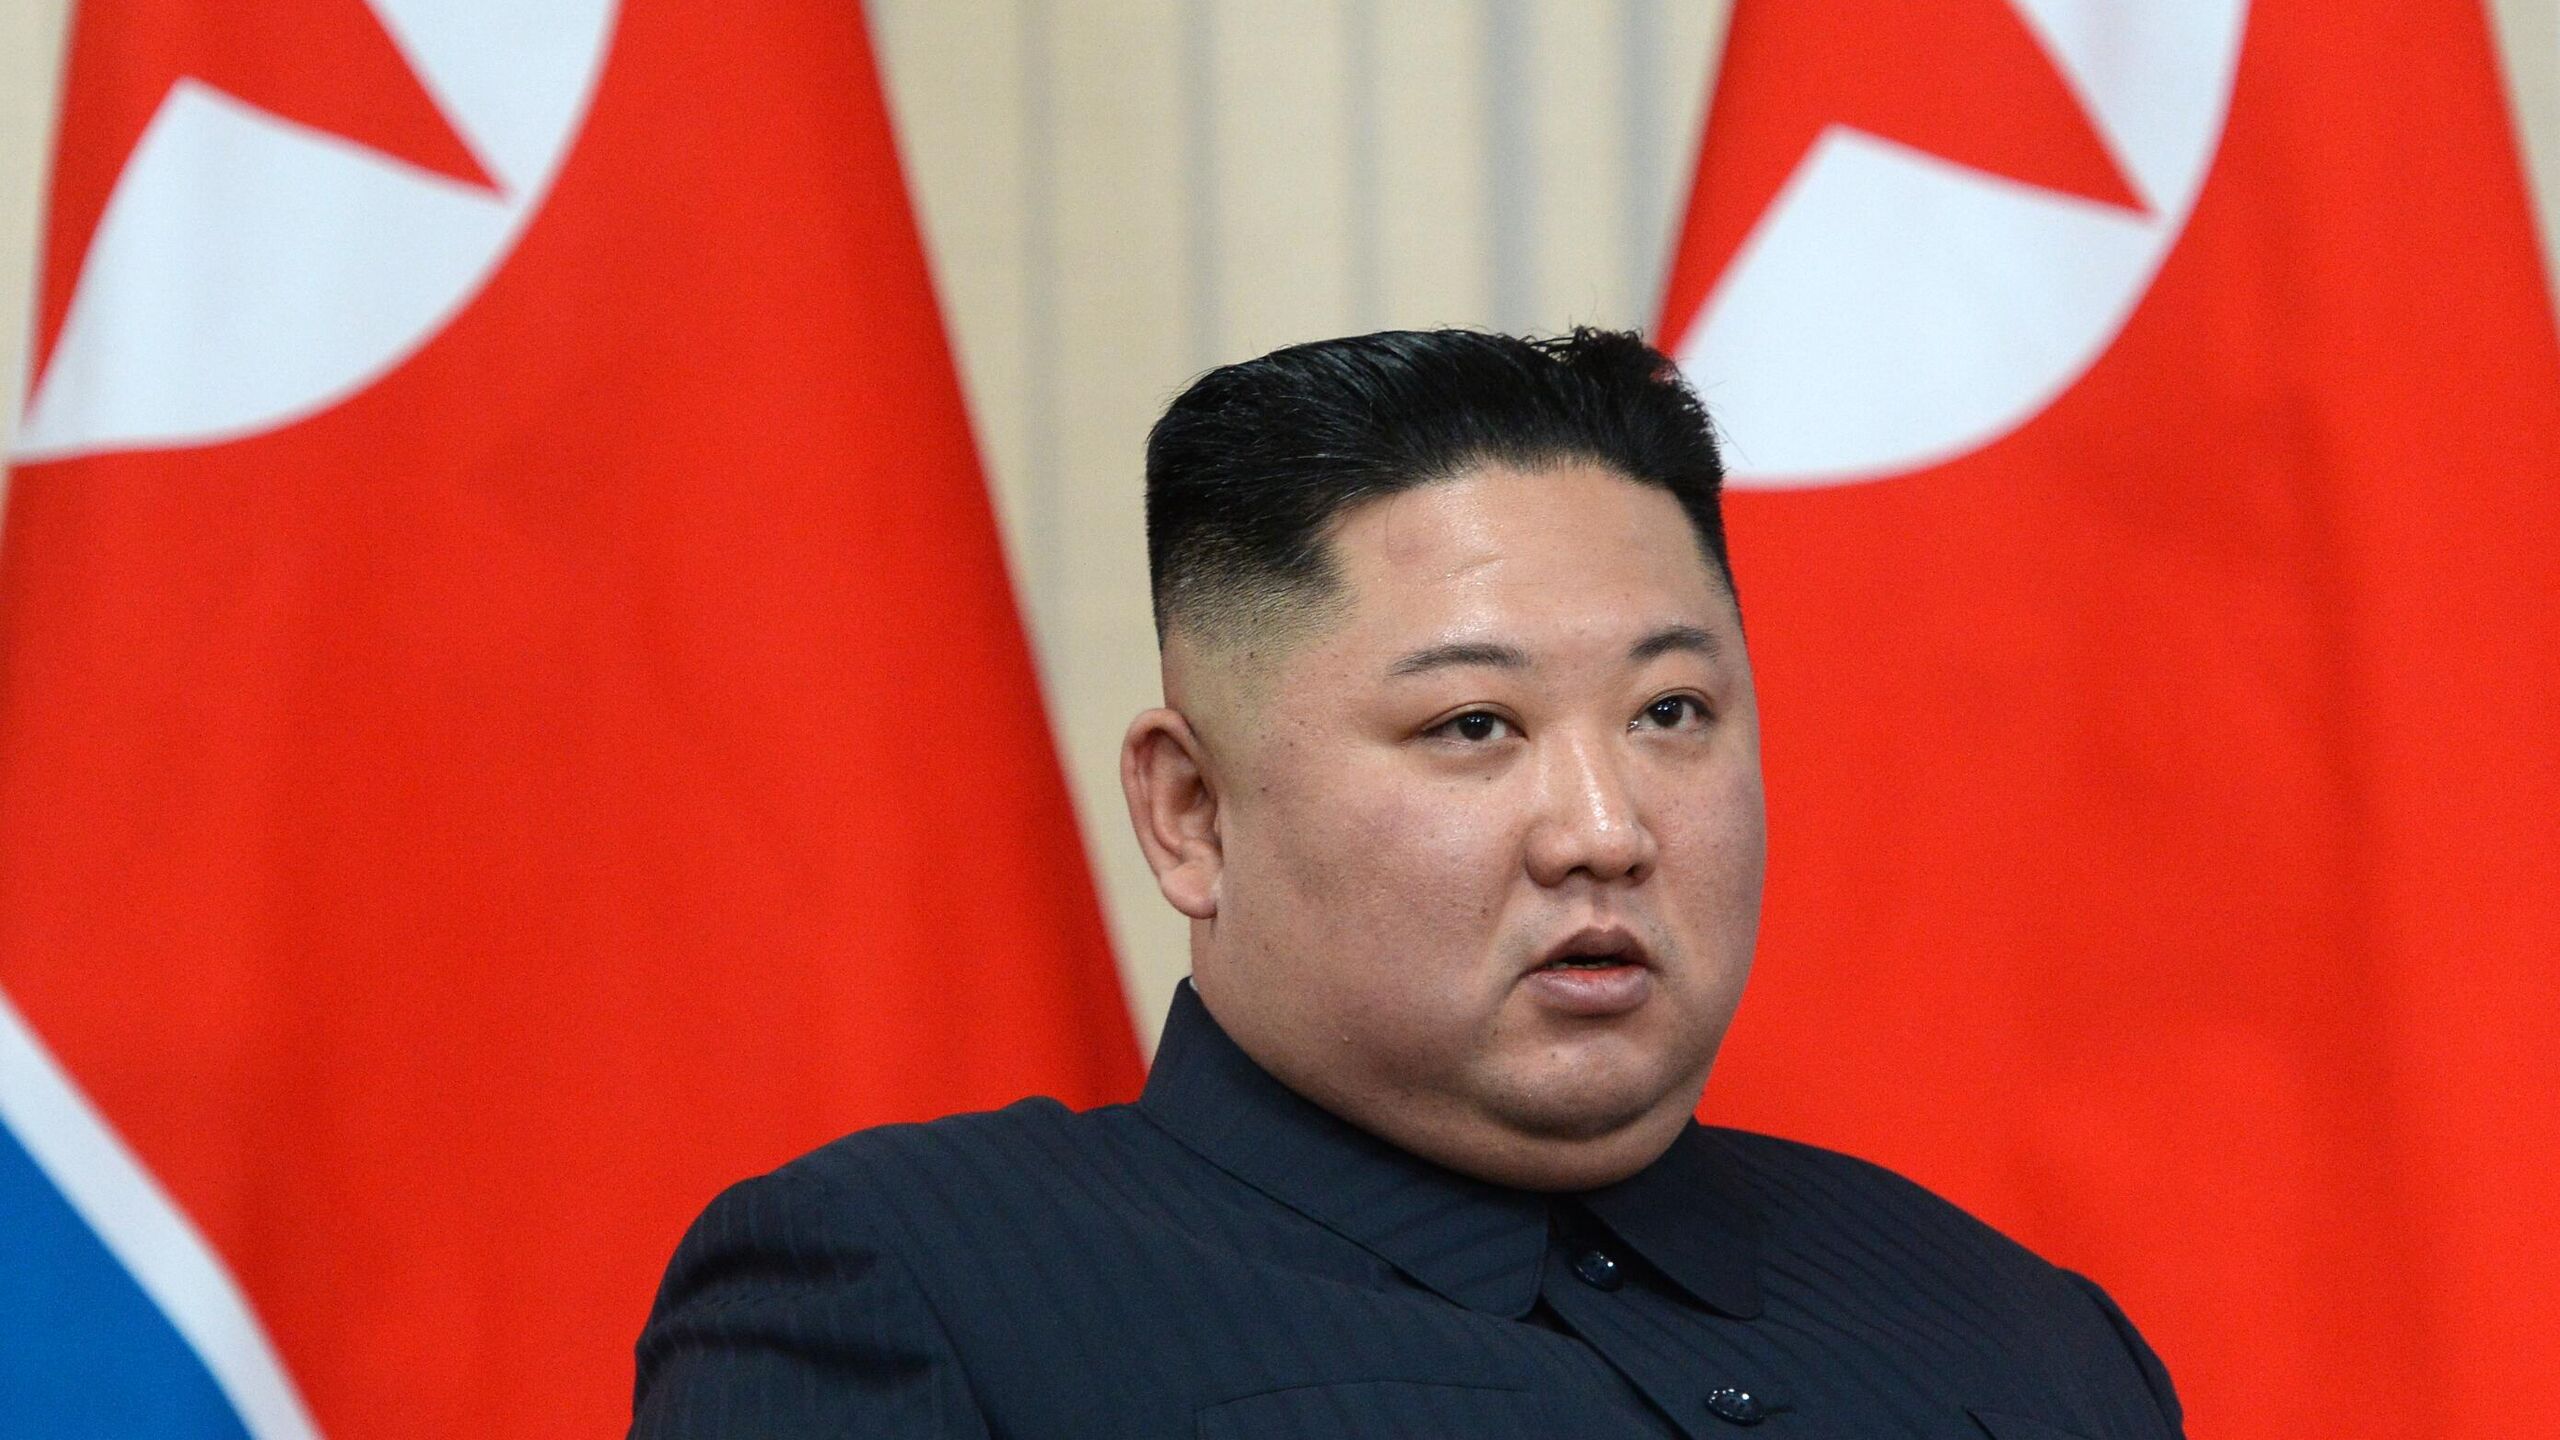 Kim Jong-un mengumumkan keadaan darurat “mendadak” di DPRK karena COVID-19